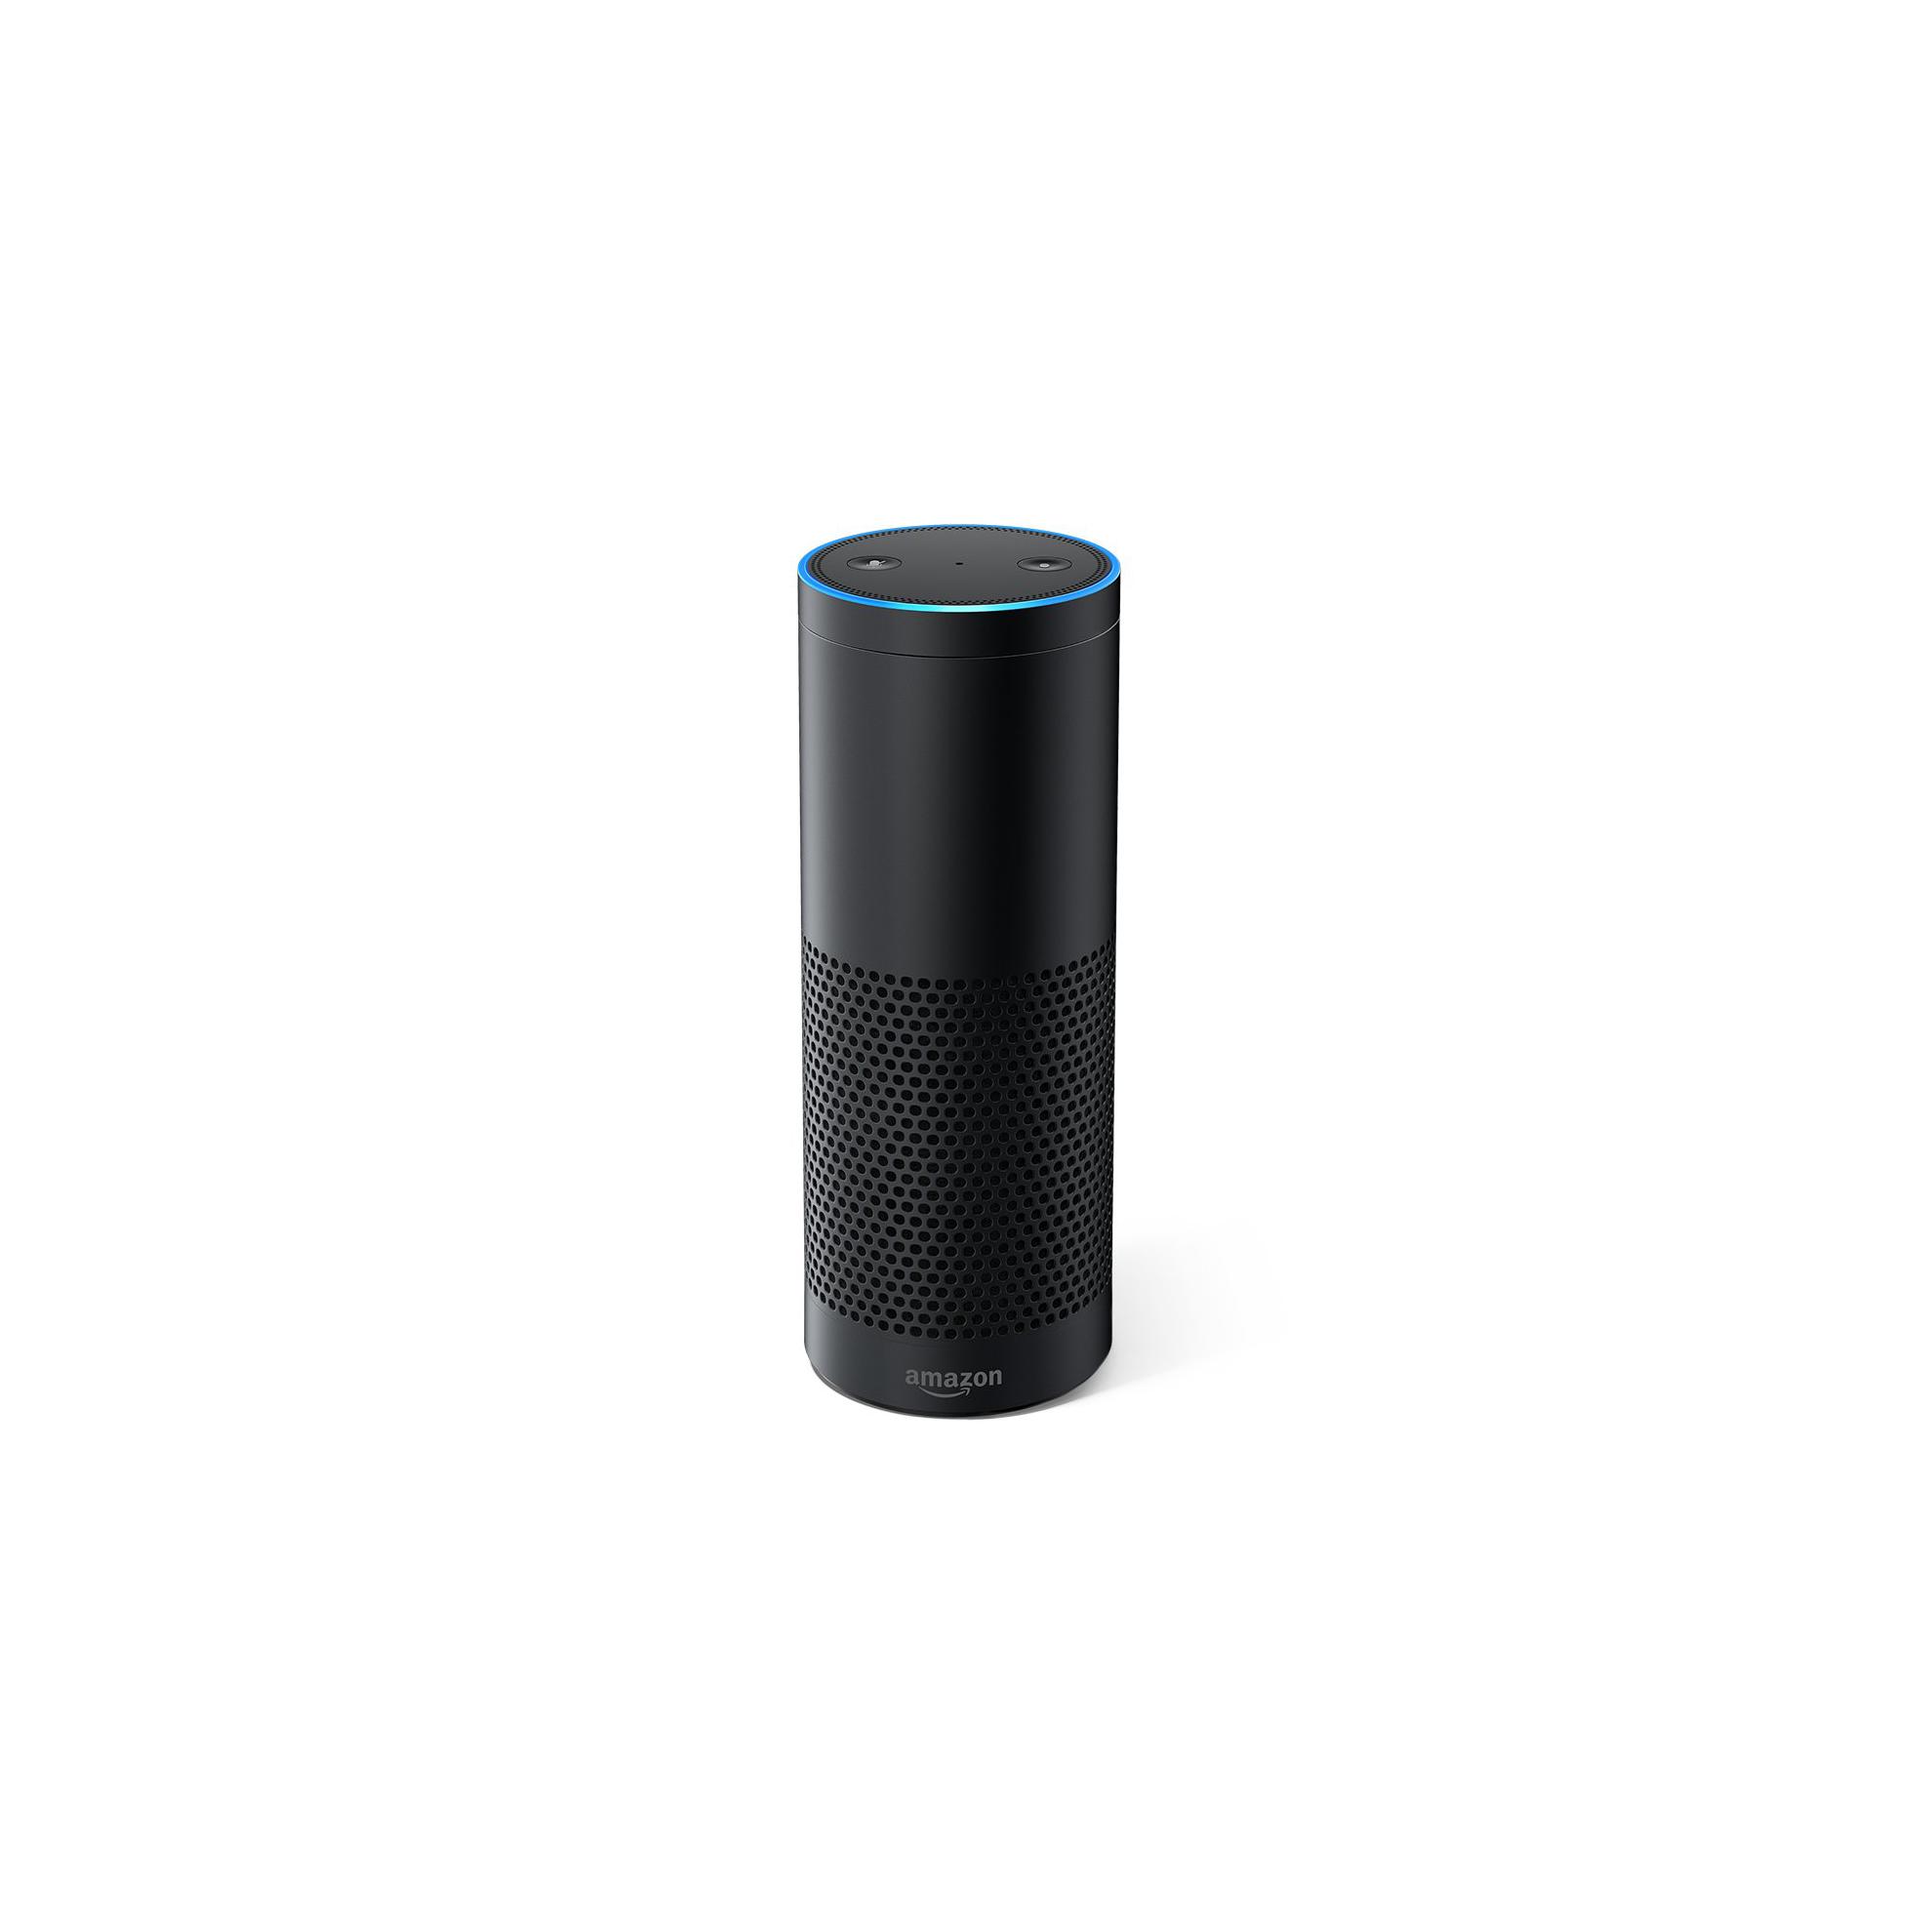 Amazon B01GAGVIE4 B00X4WHP5E V Channel Year 2016 Product Pick: Amazon Echo Voice Activated Smart Speaker Black